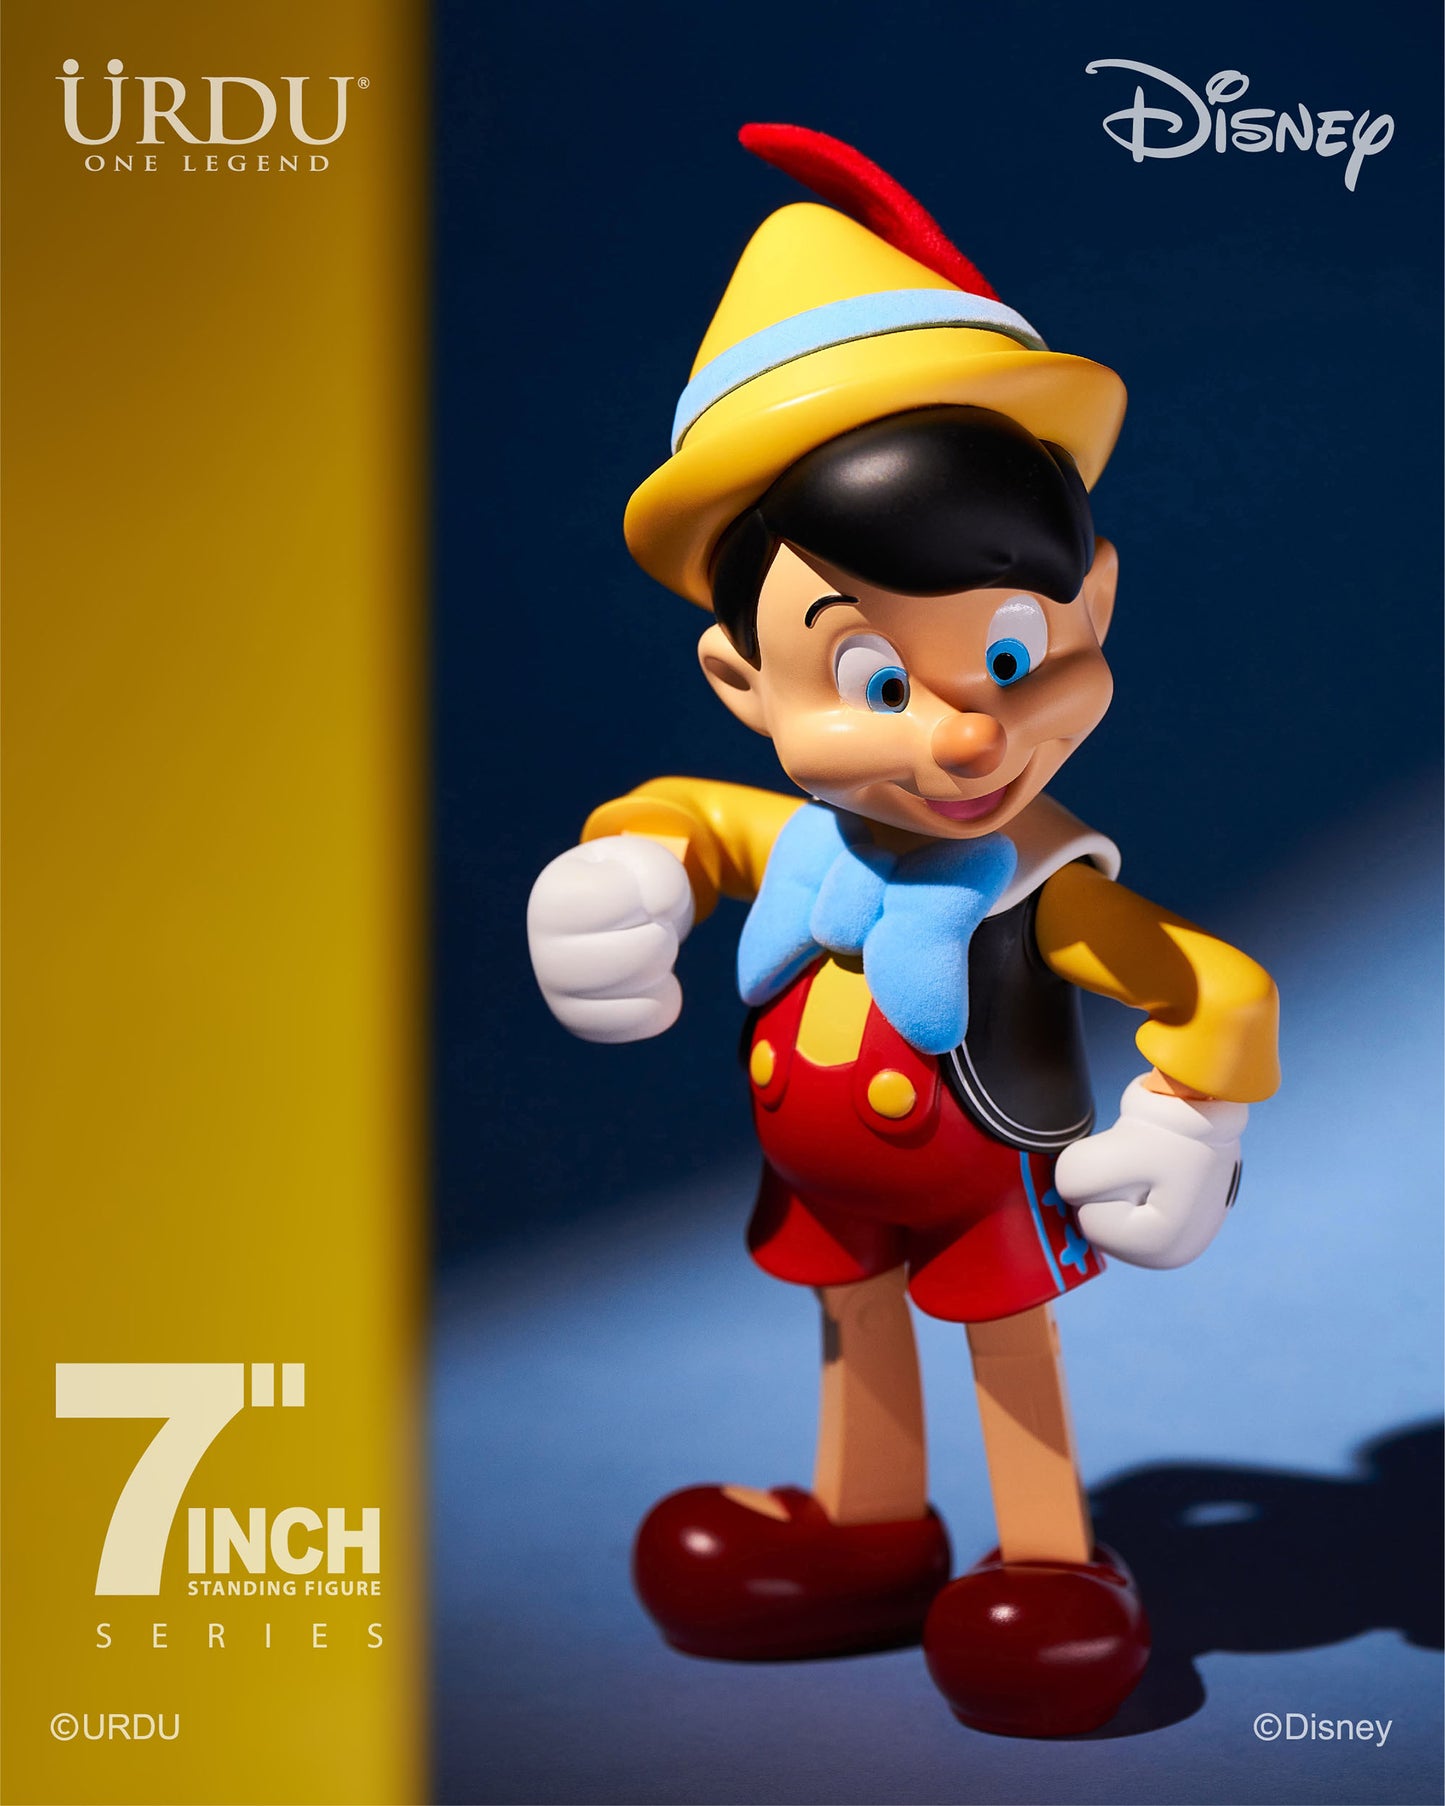 
                  
                    URDU 7 Inch Standing Figure - Pinocchio
                  
                